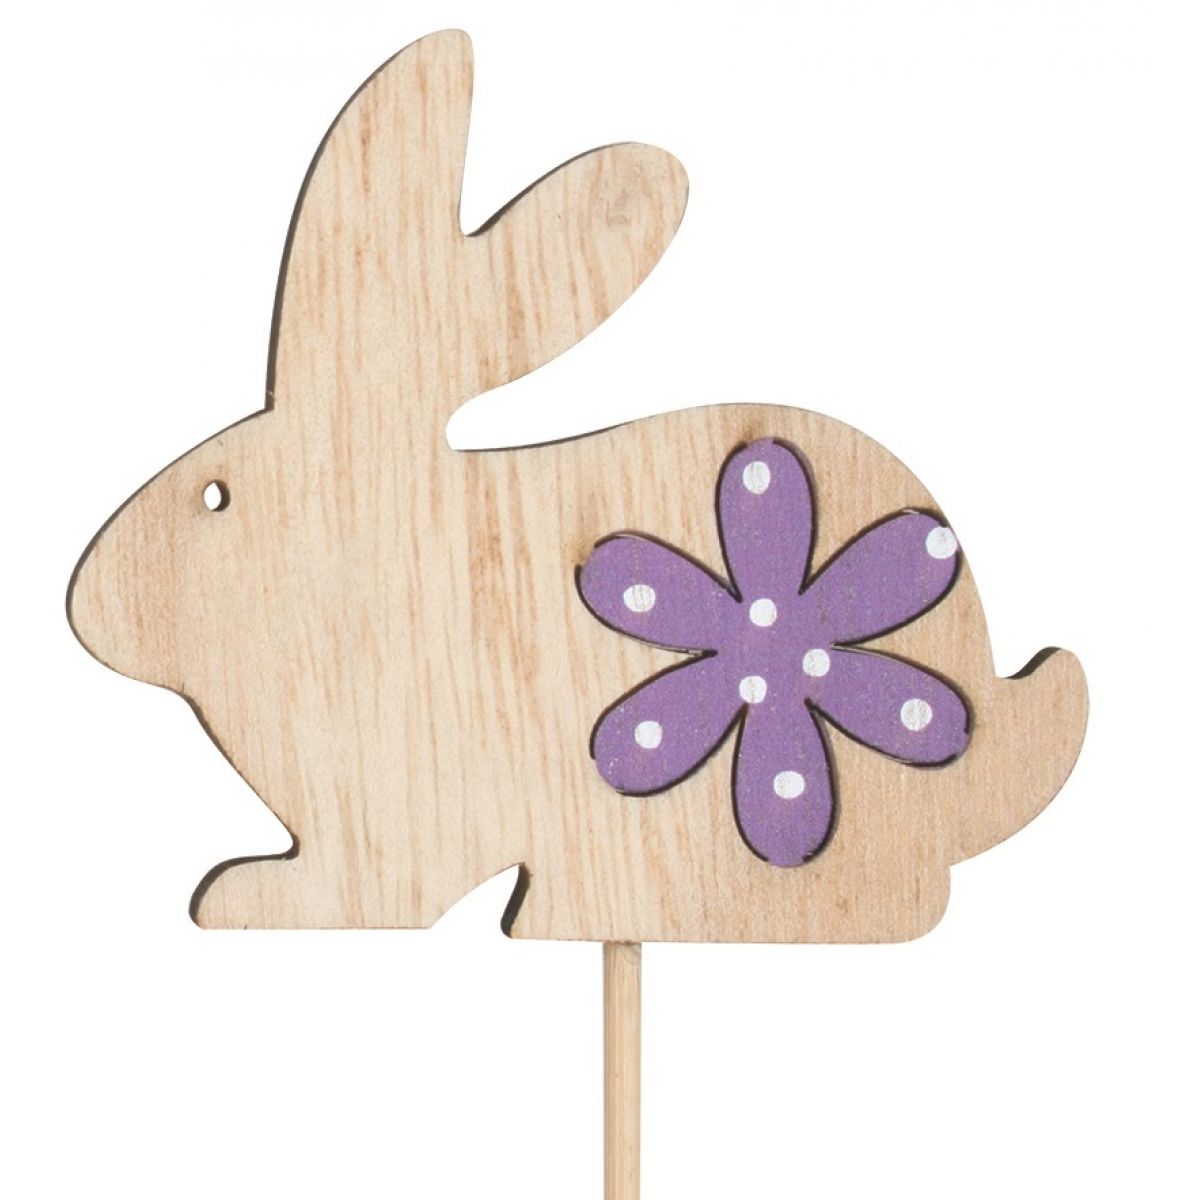 Anděl Zajačik drevený na špajli s kvietkom fialovým 8 cm